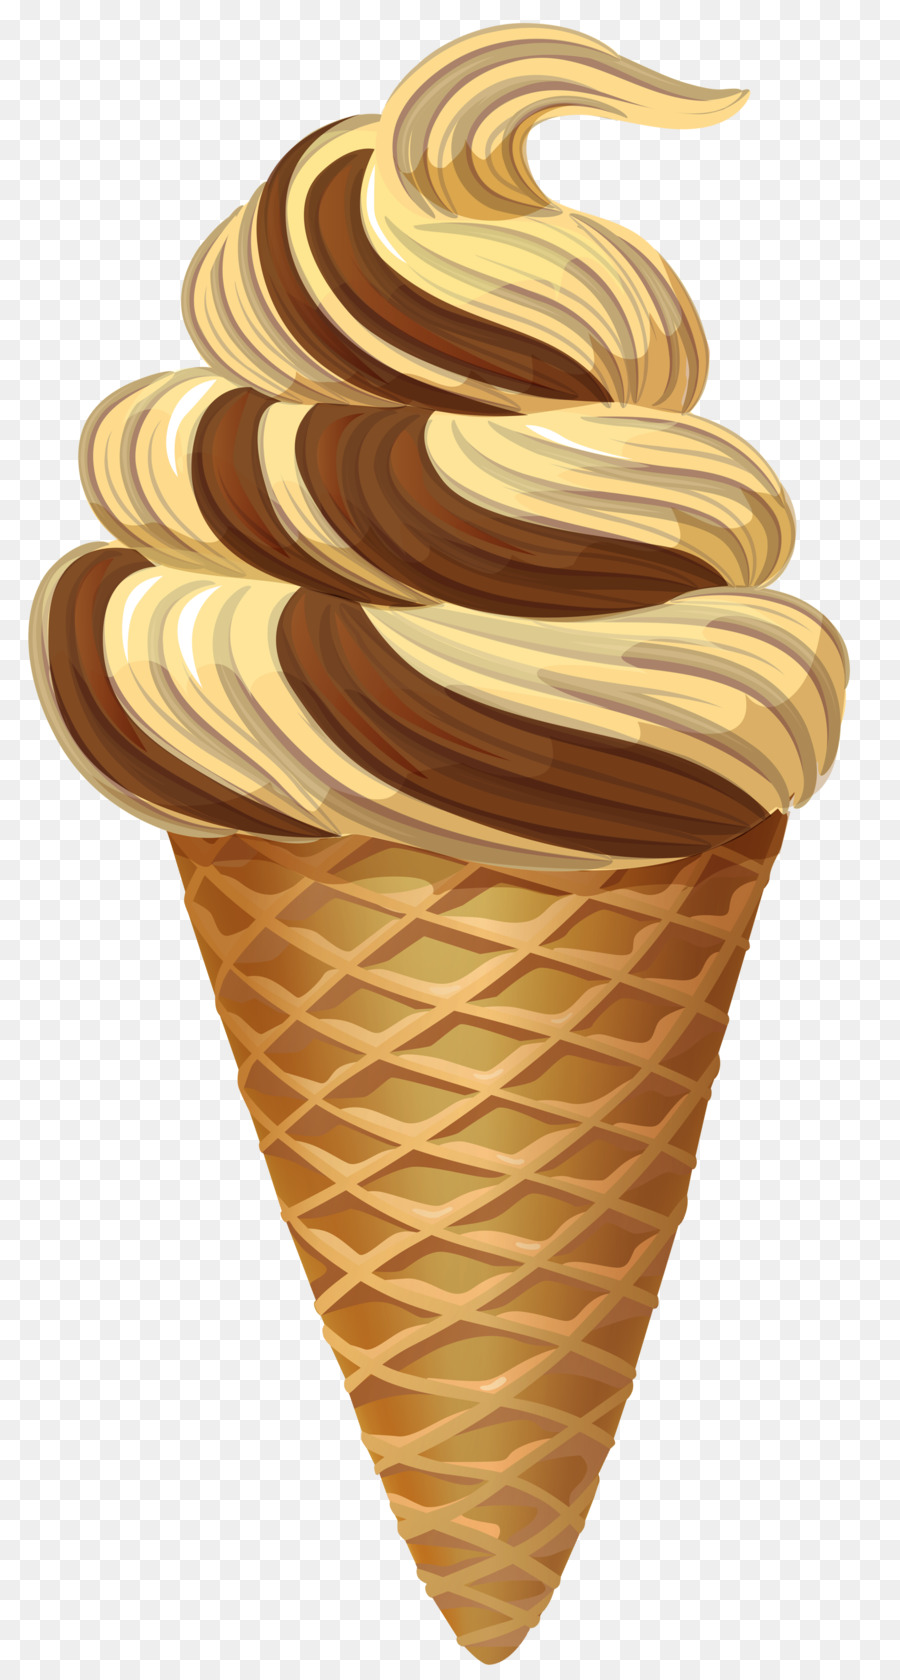 Coni gelato al Cioccolato gelato Sundae - gelati